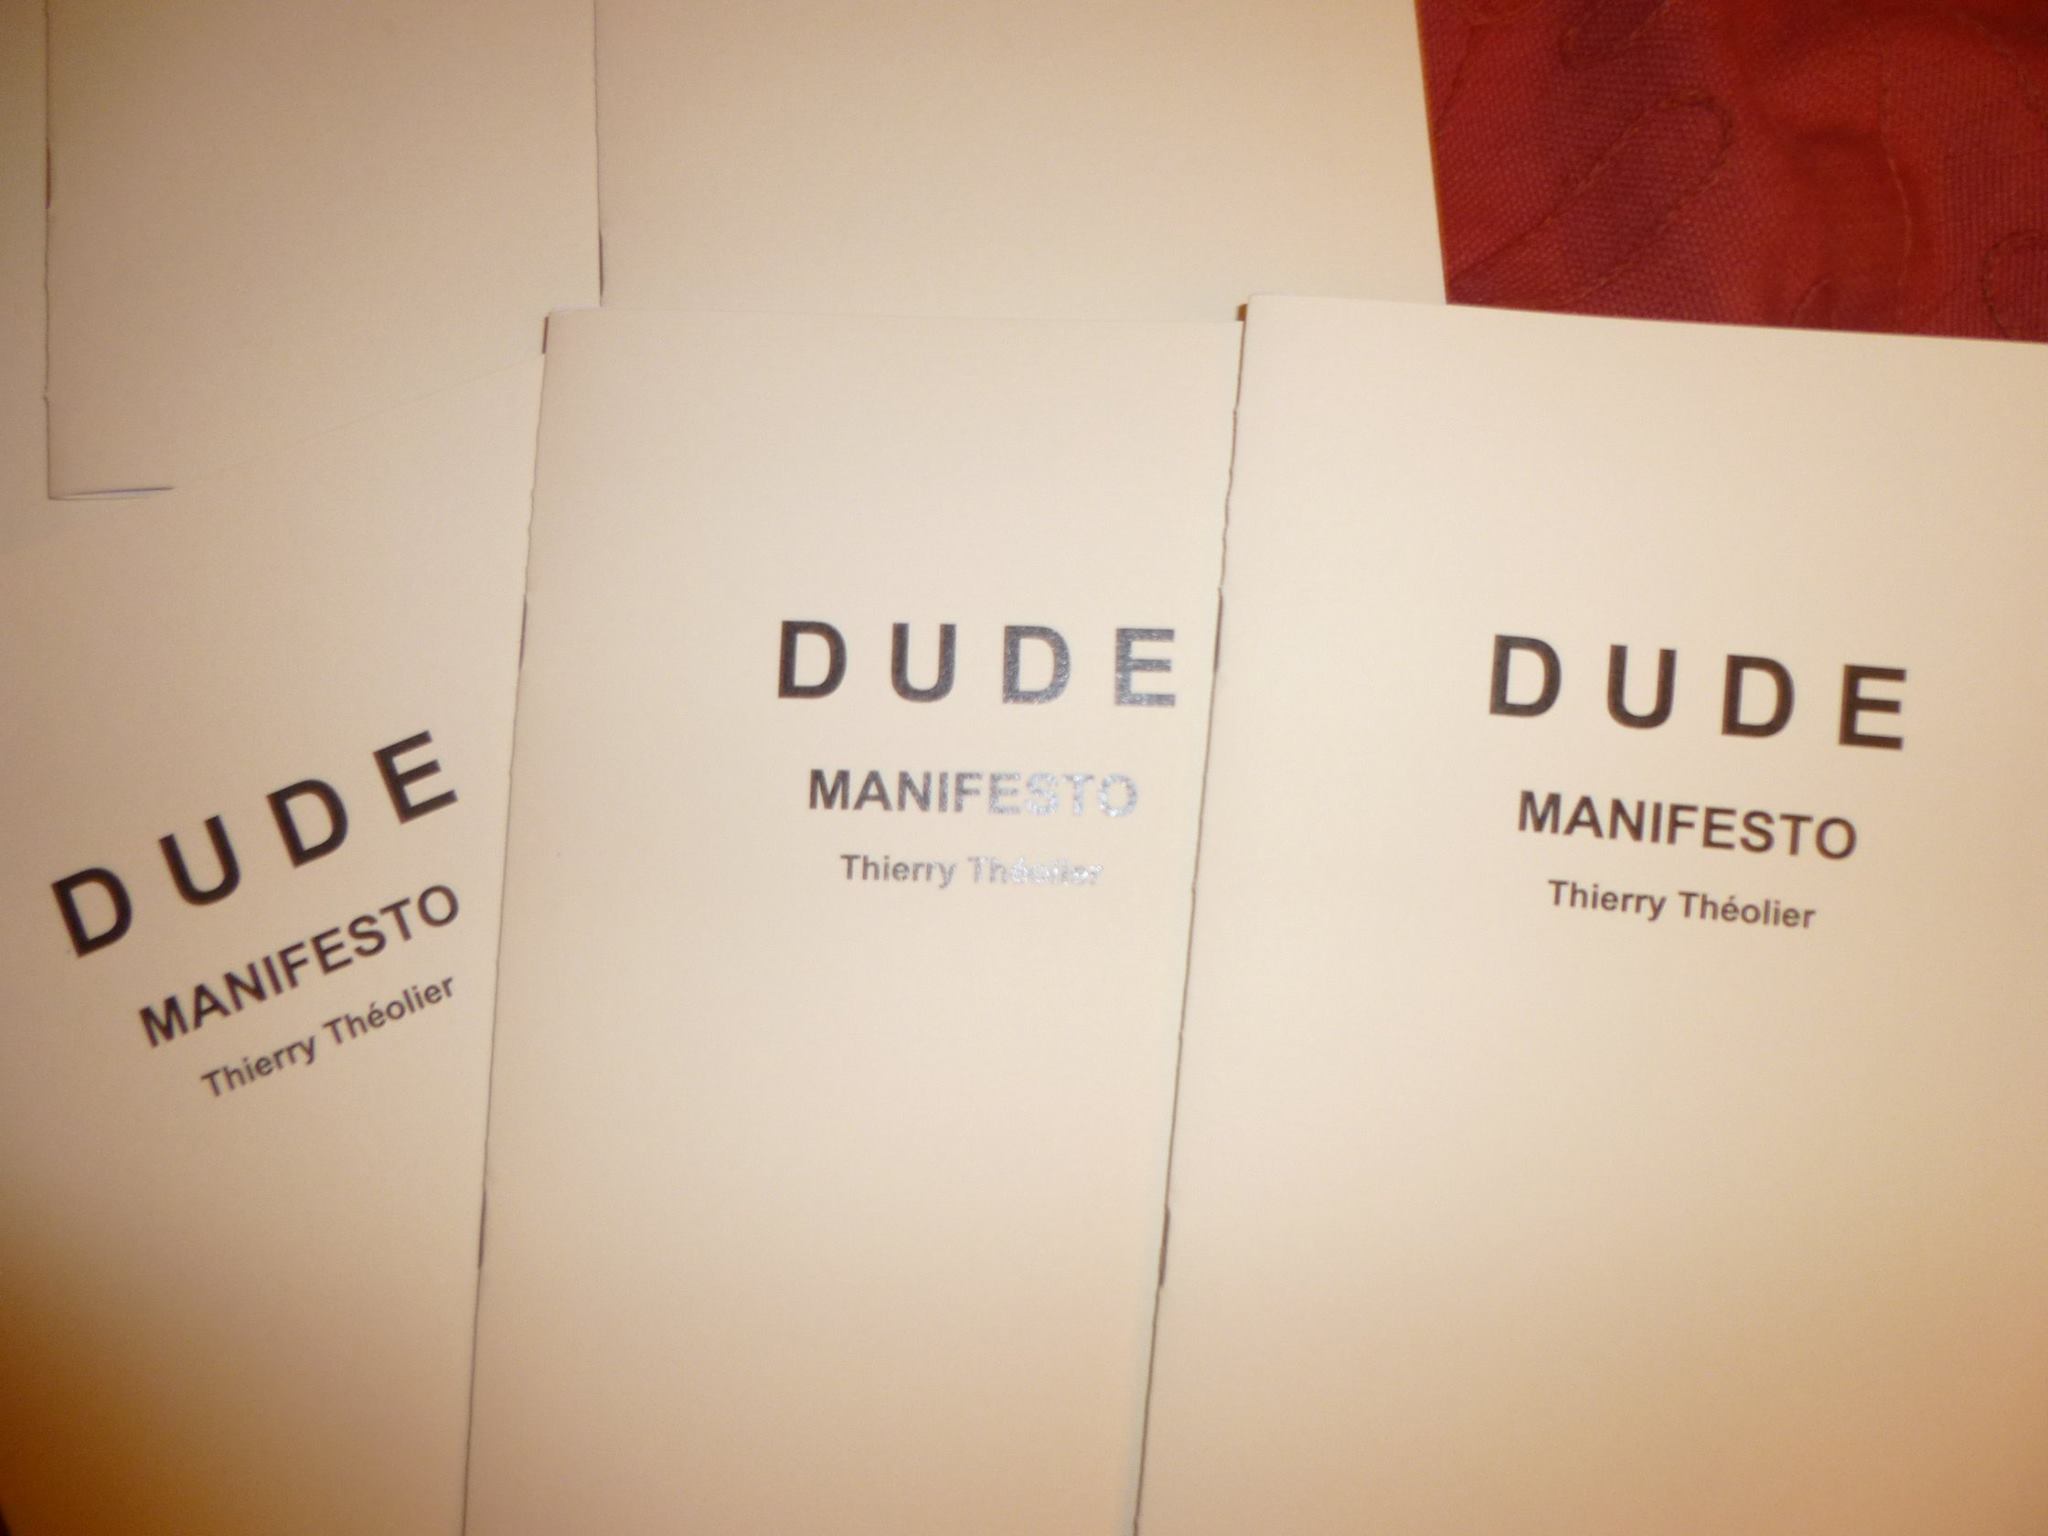 DUDE MANIFESTO (première version)